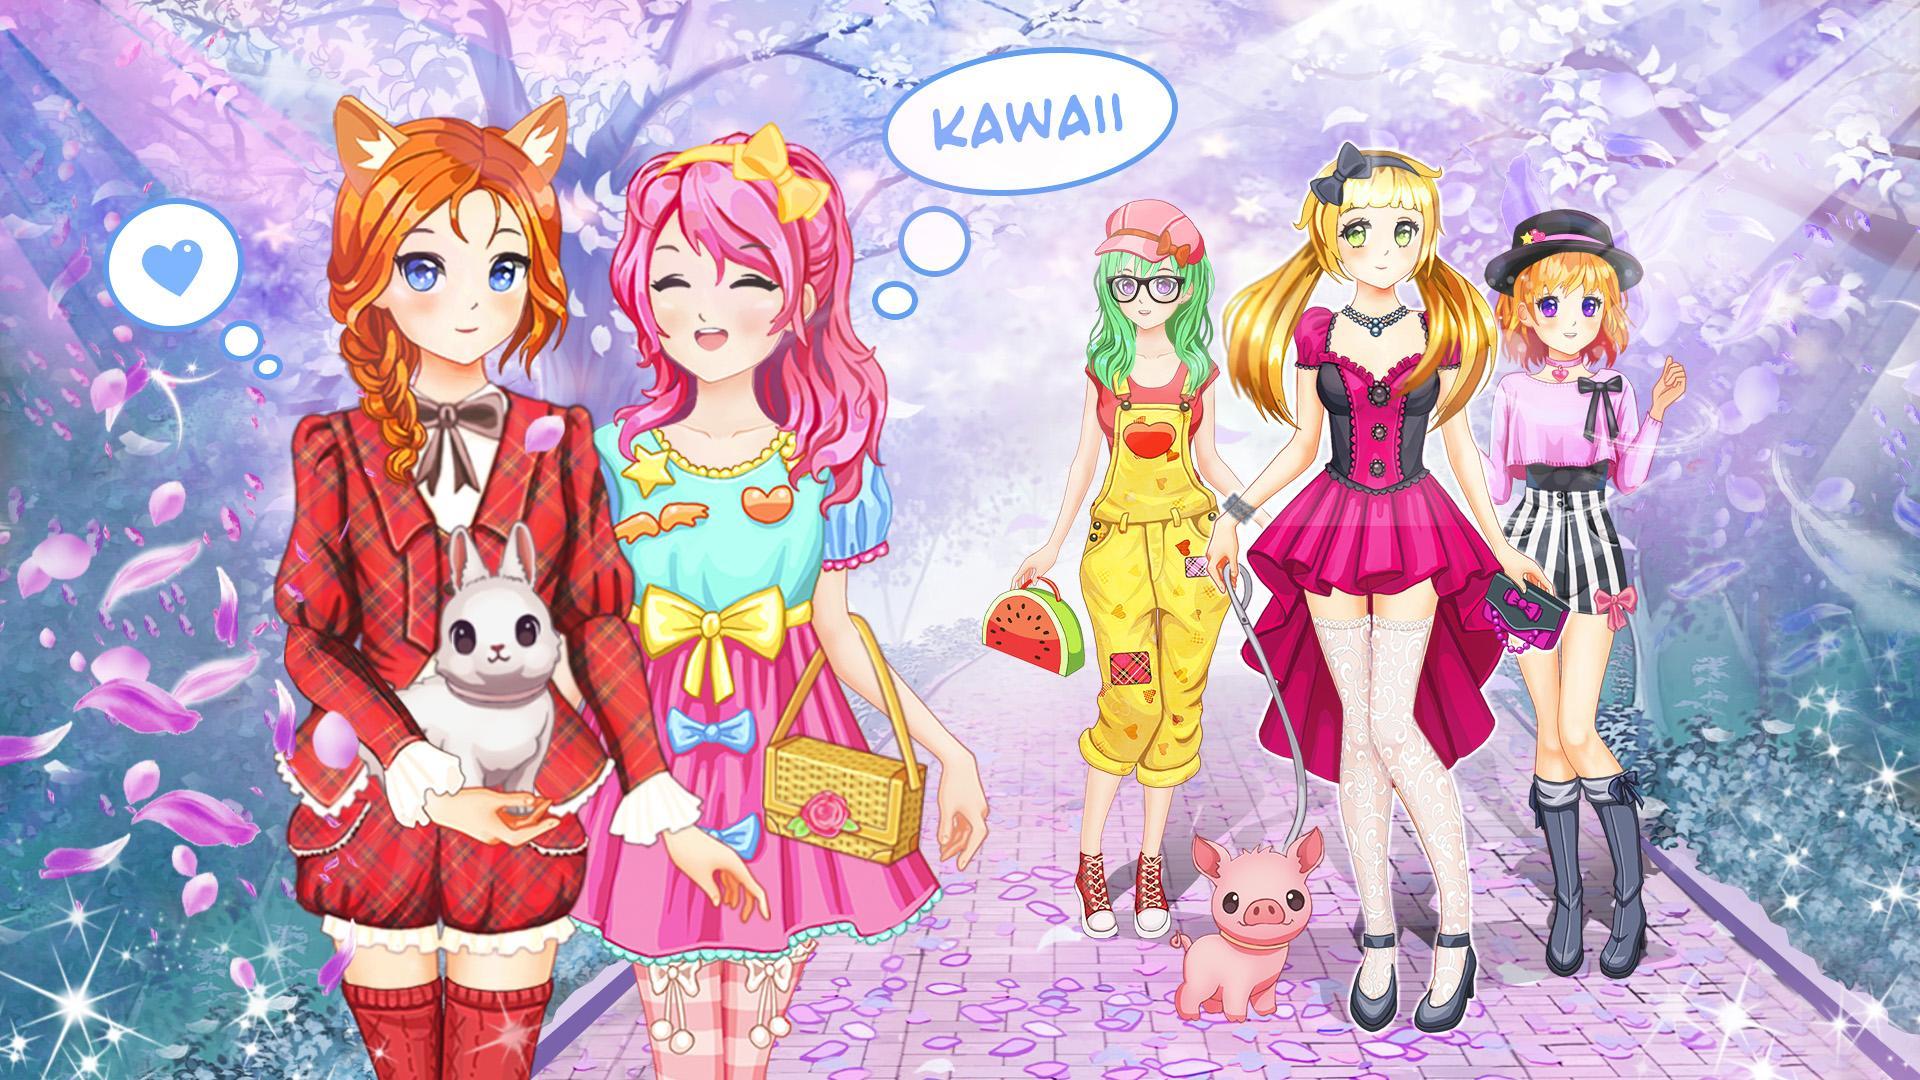 Screenshot 1 of Game Berdandan Anime Kawaii 5.5